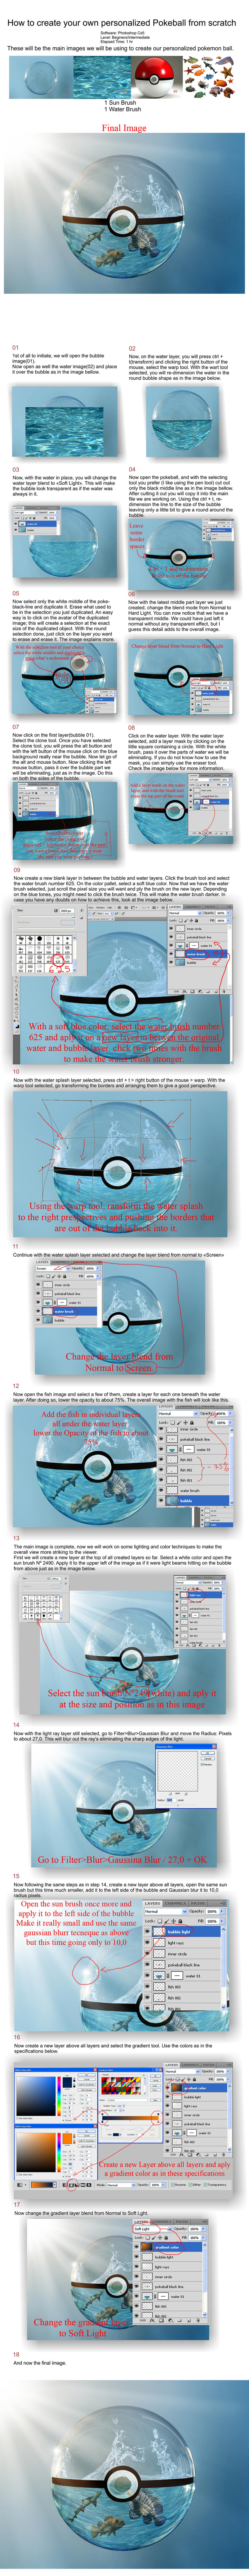 Pokemon Bubble Tutorial - Photoshop